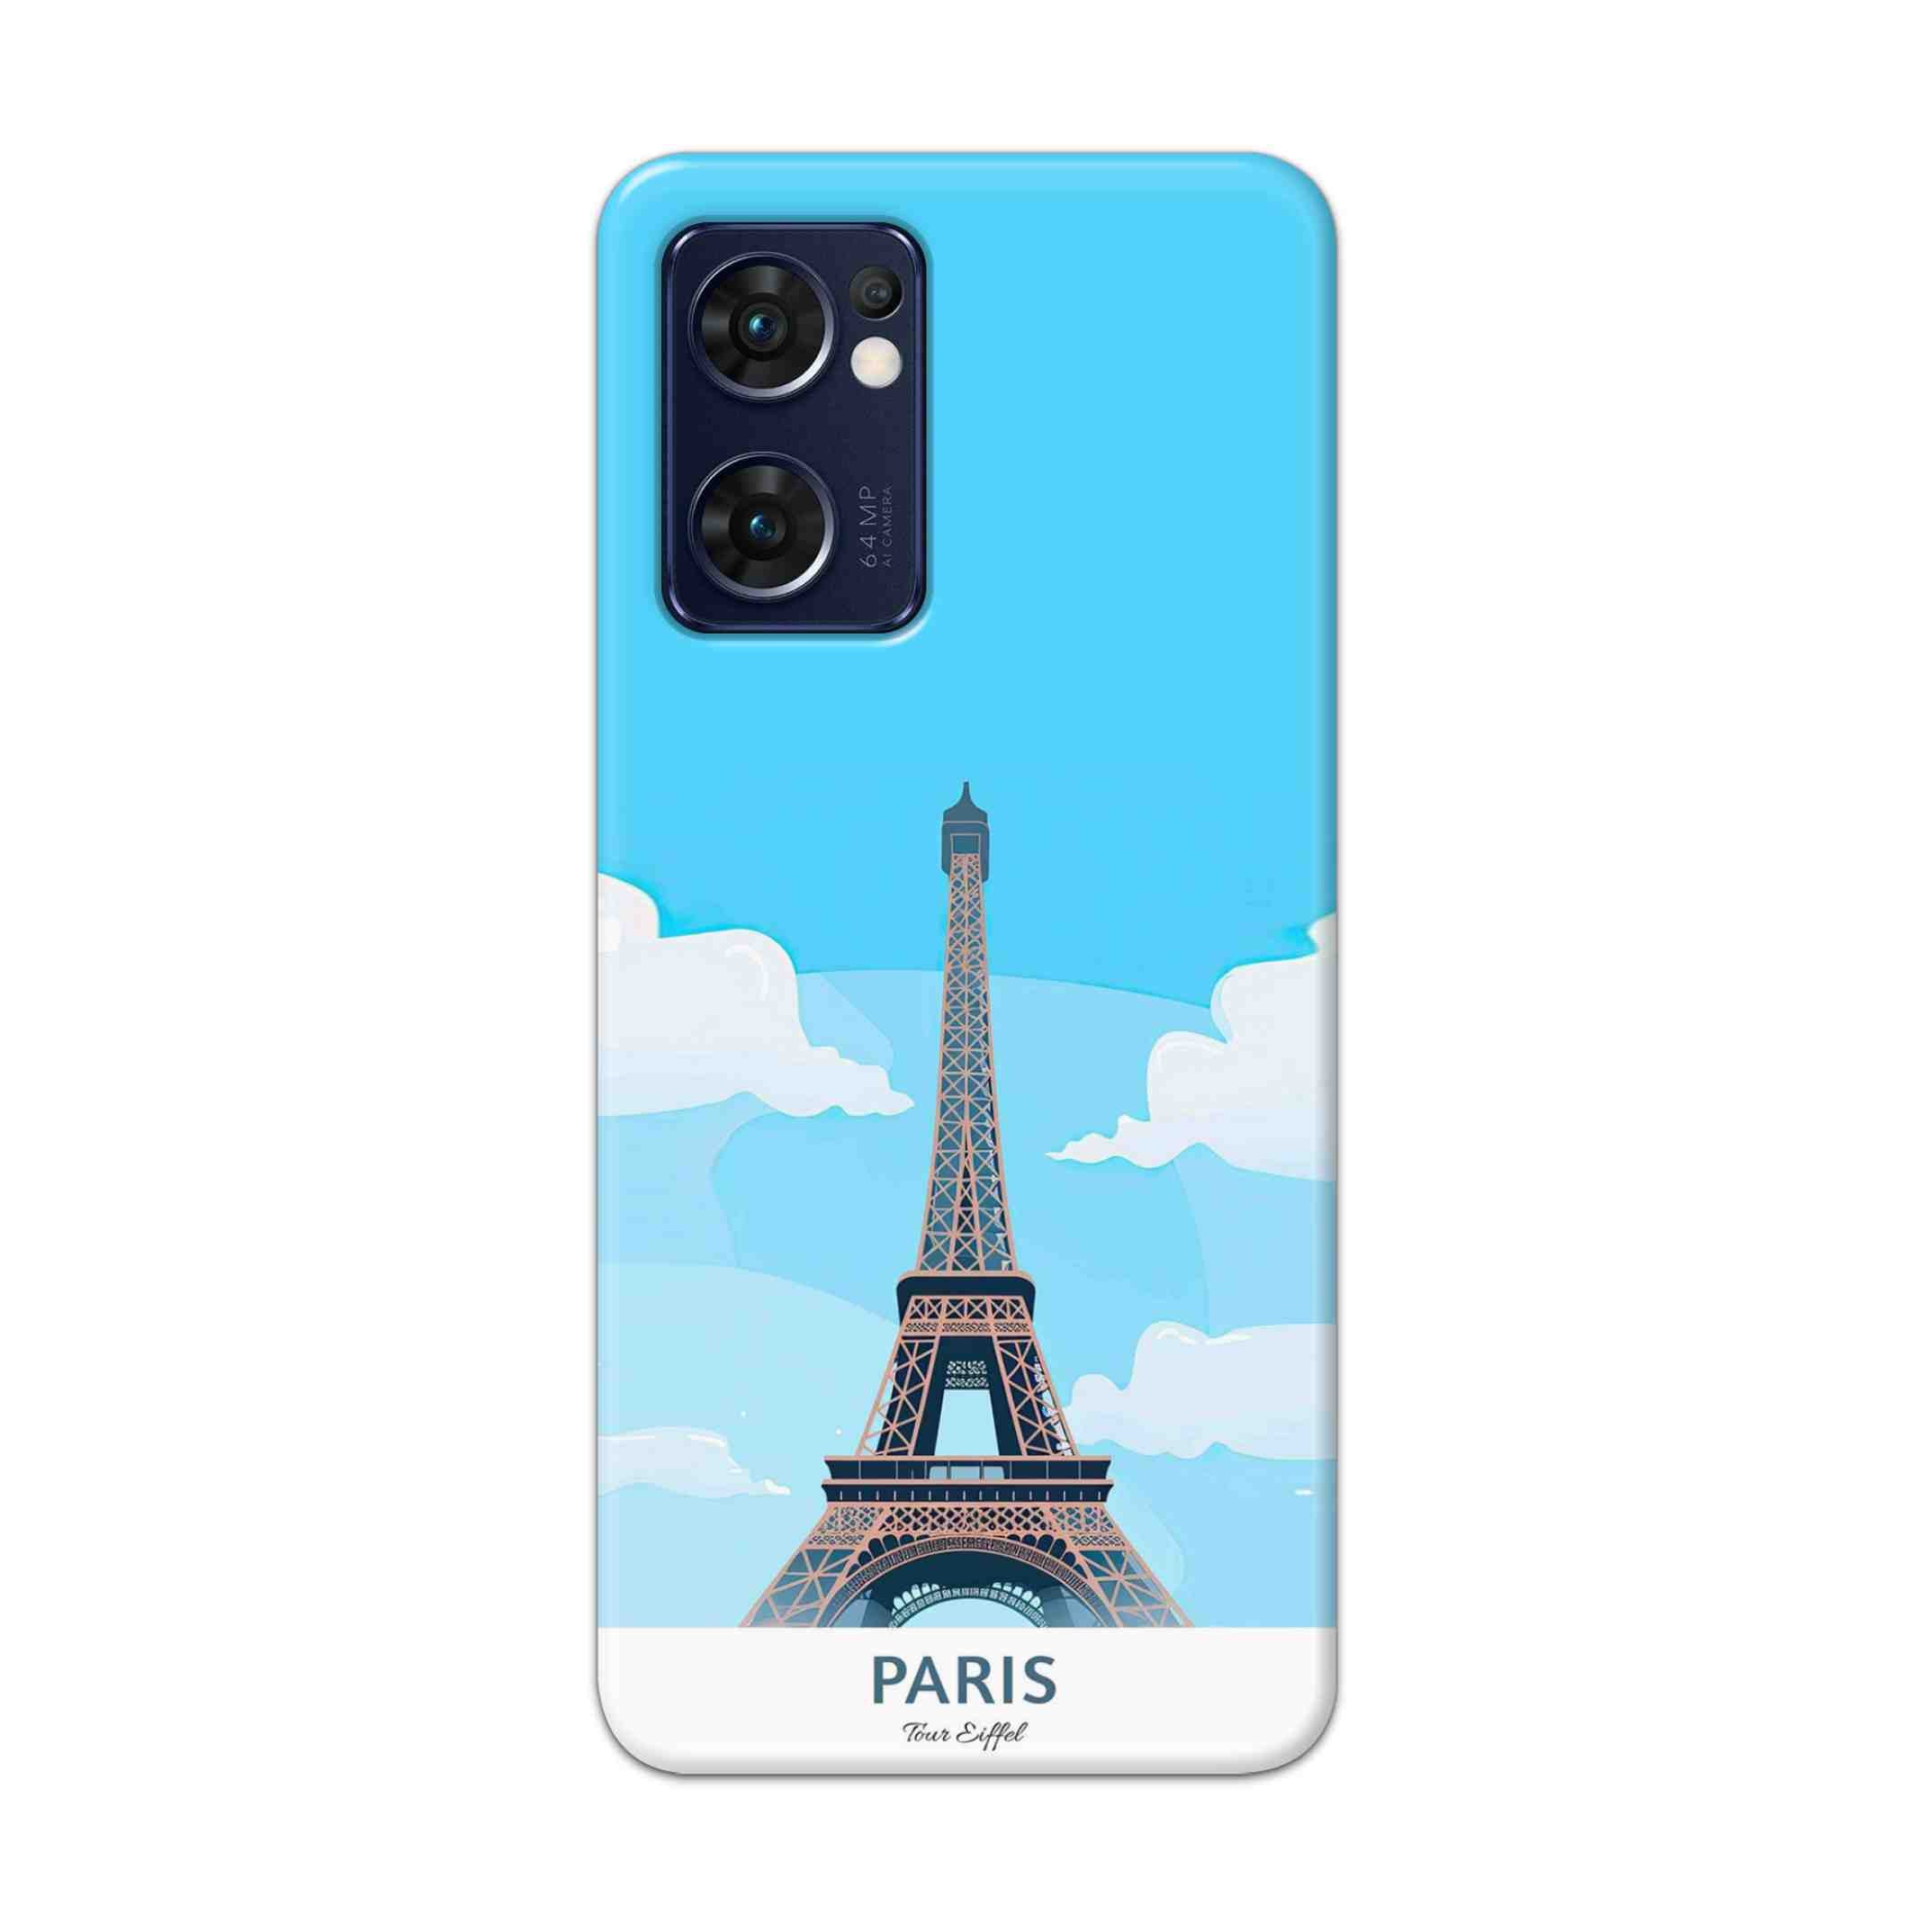 Buy Paris Hard Back Mobile Phone Case Cover For Reno 7 5G Online